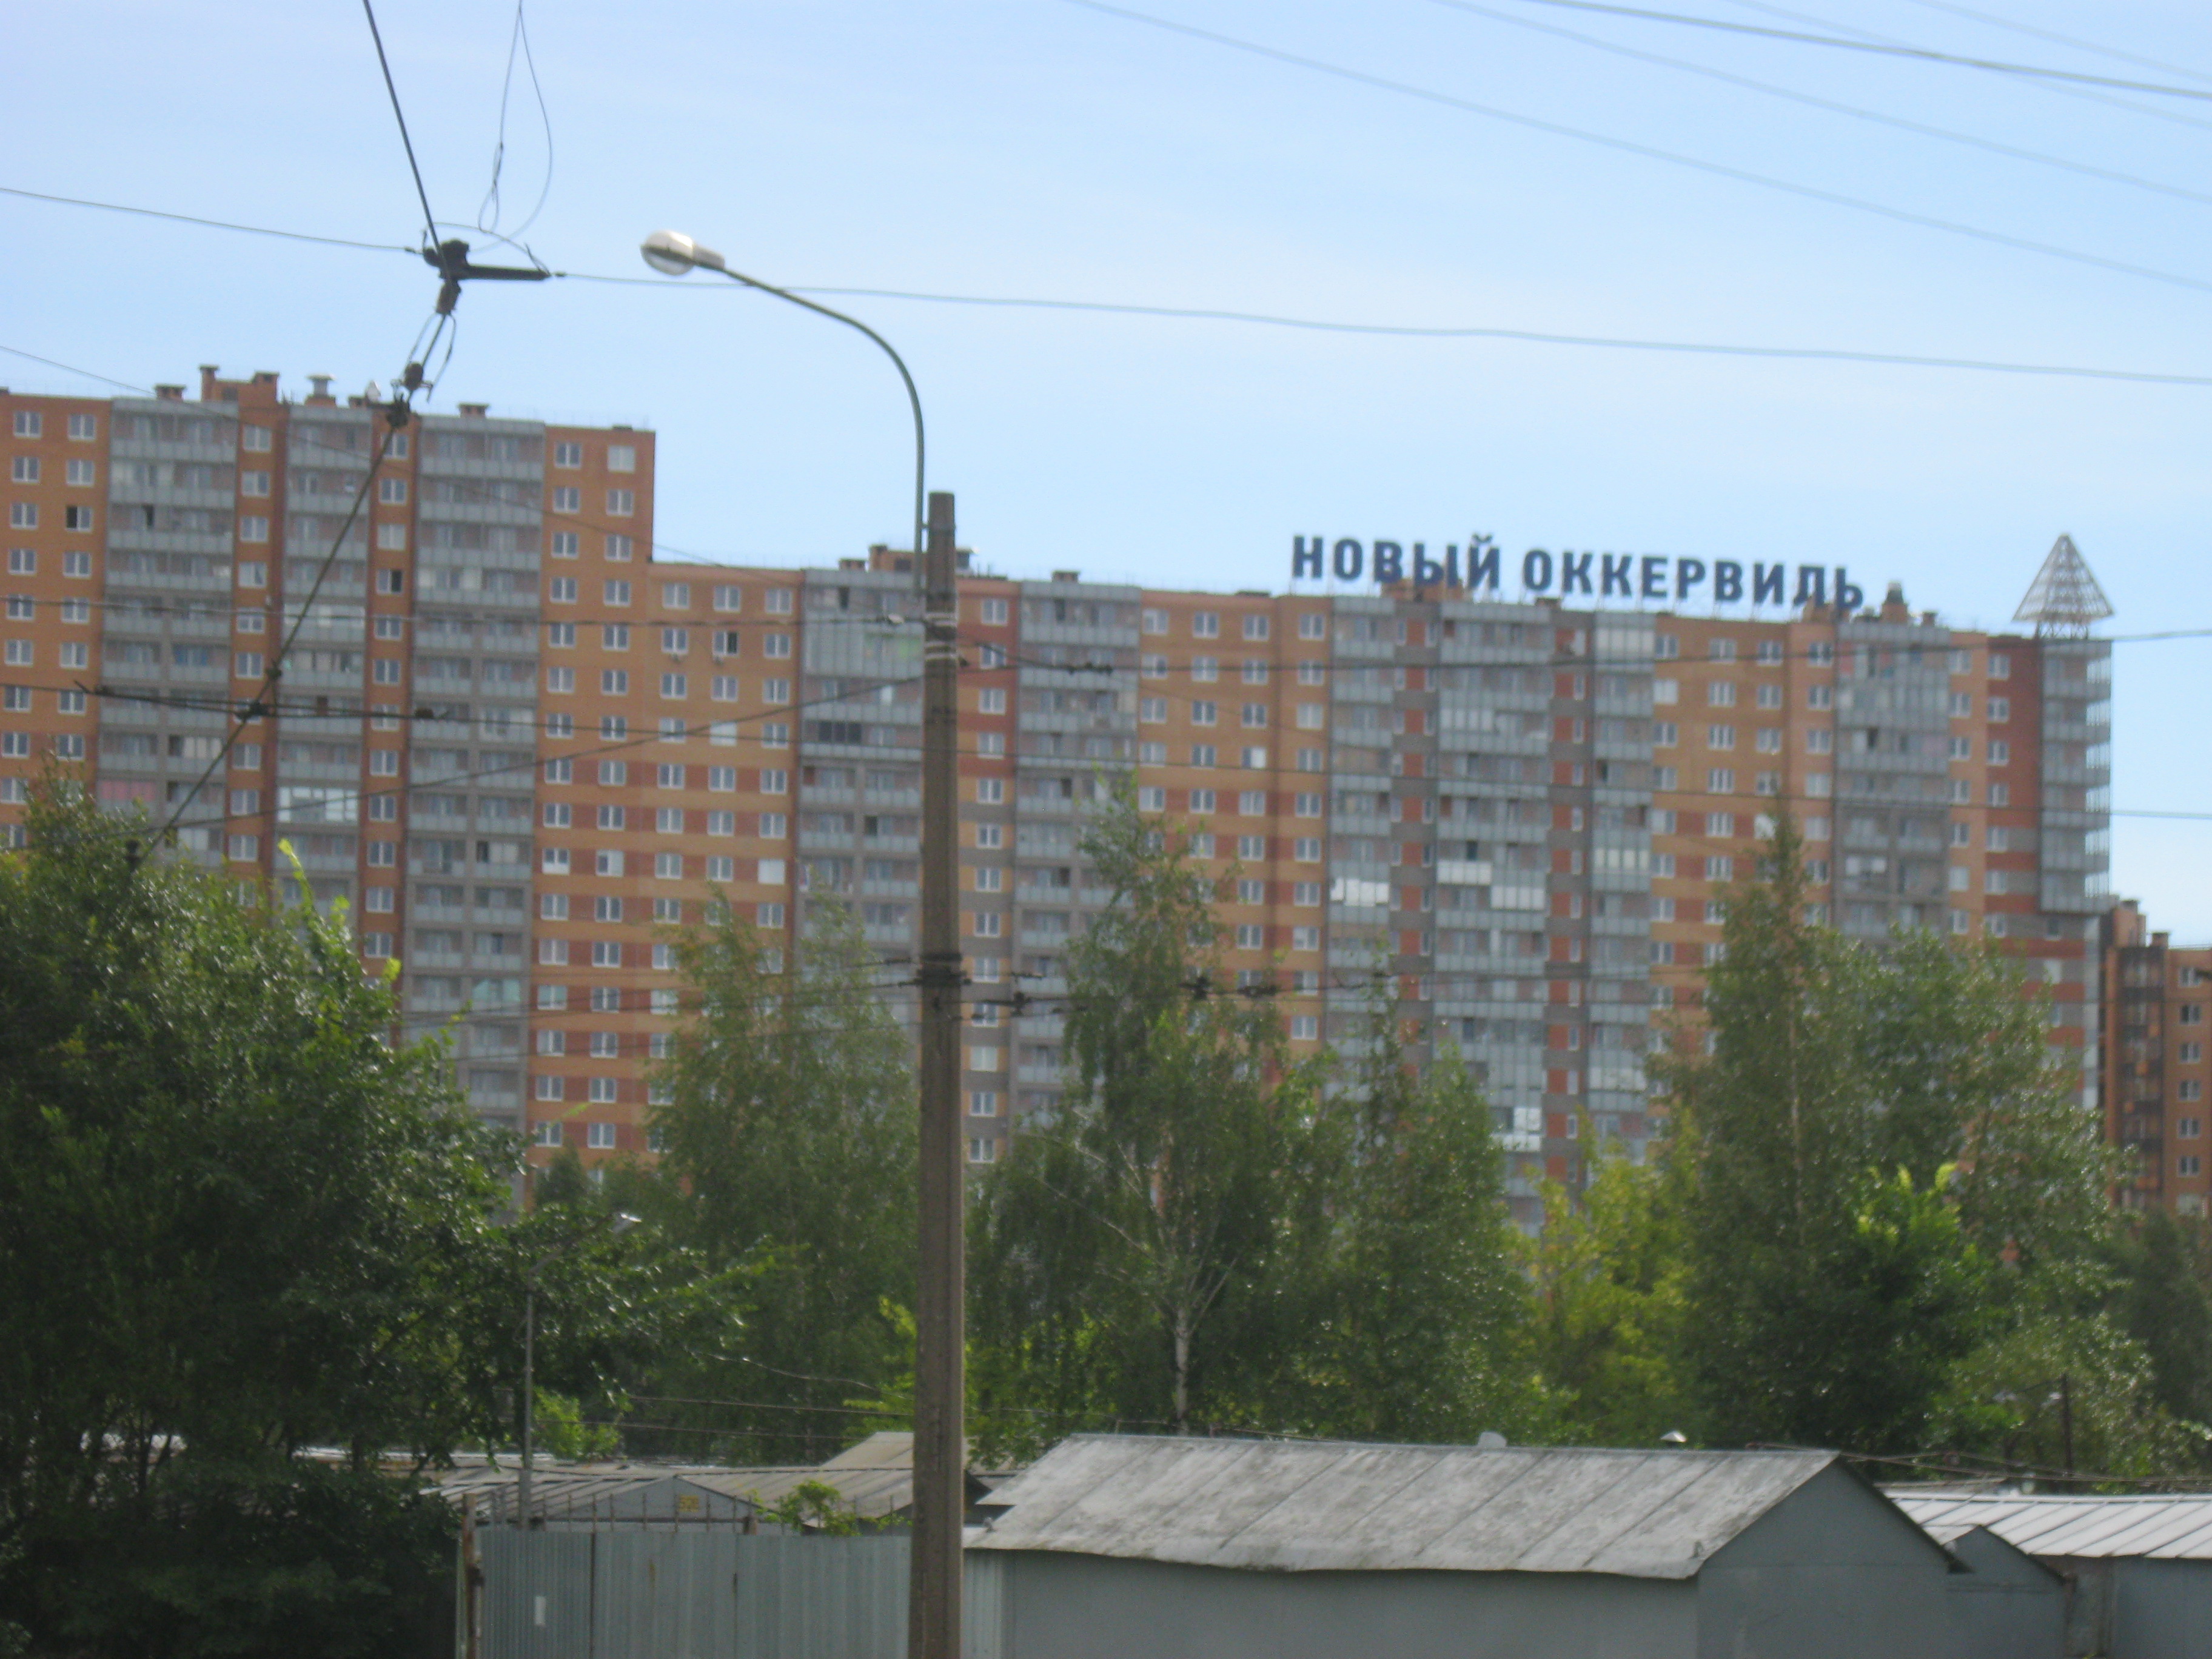 Район оккервиль санкт петербурга